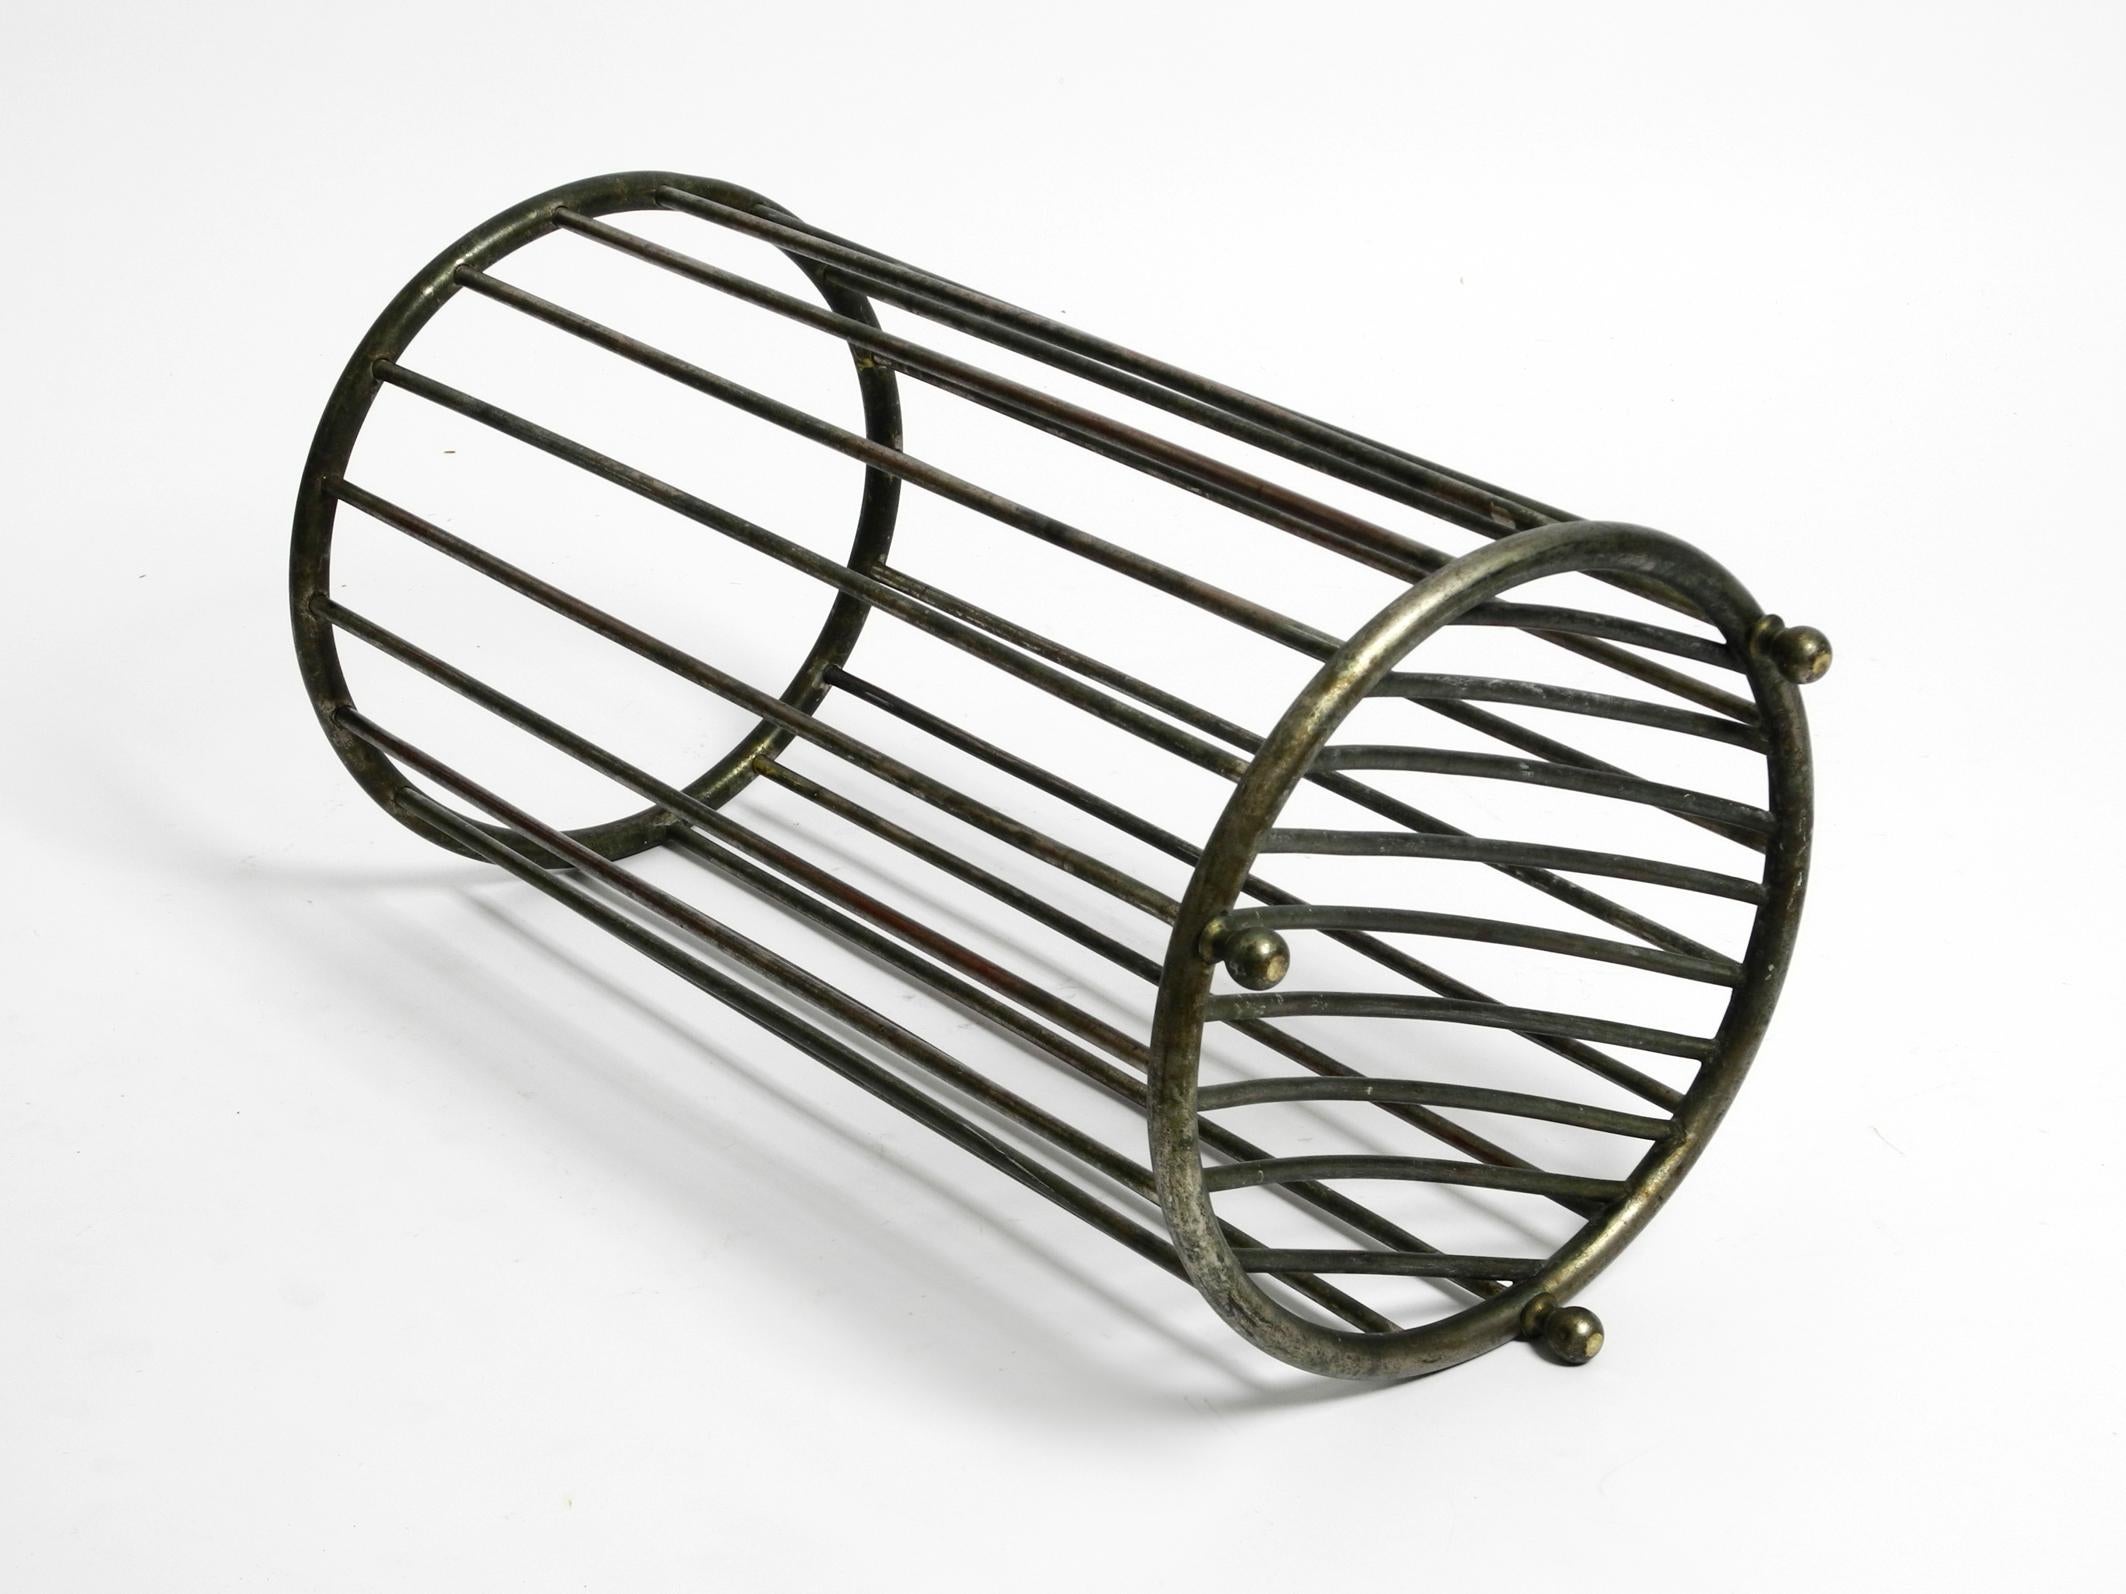 American Original Mott's Plumbing Towel Basket Made of Nickel-Plated Brass from the 1910s